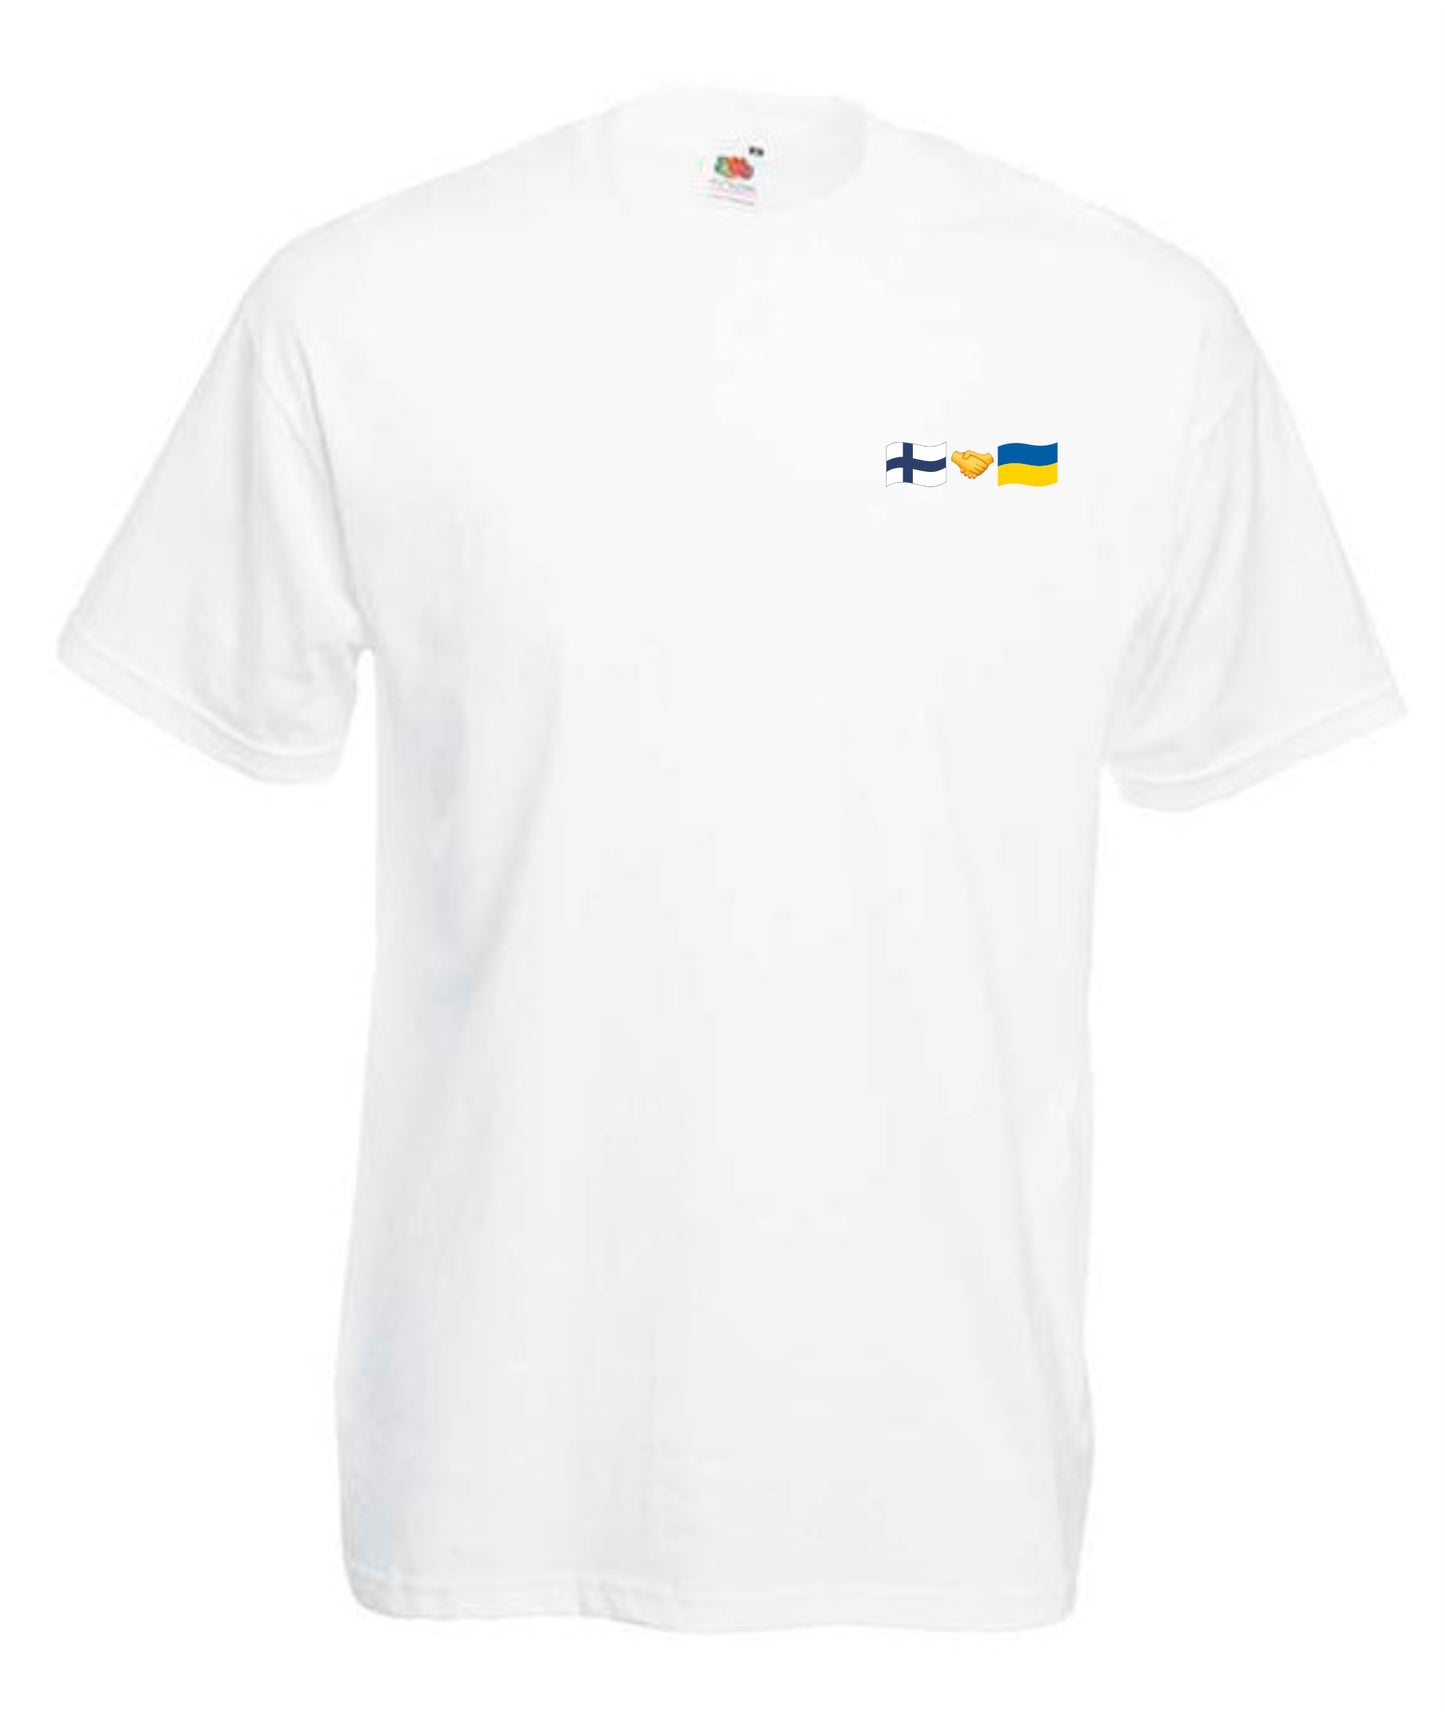 Т-shirt Finland + Ukraine (small logo)